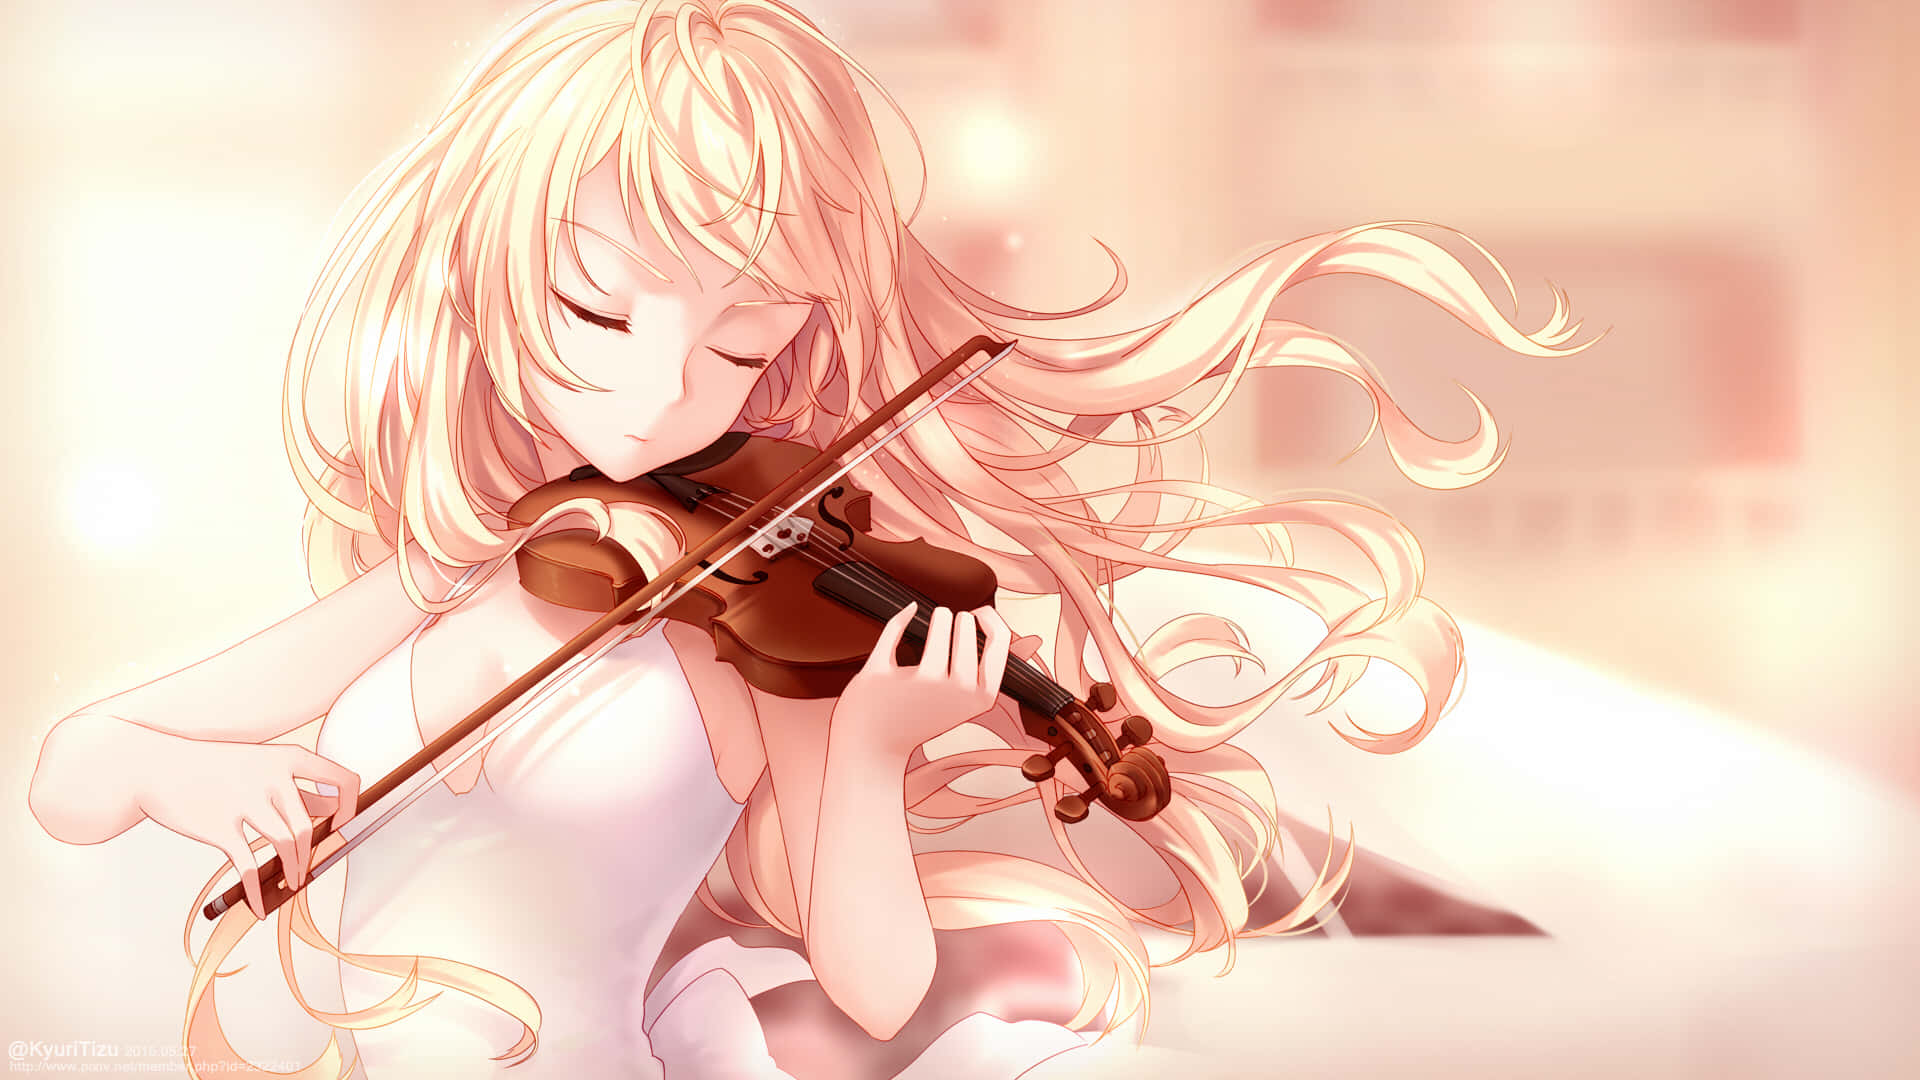 Kaori Miyazono passionately plays her violin at a performance.